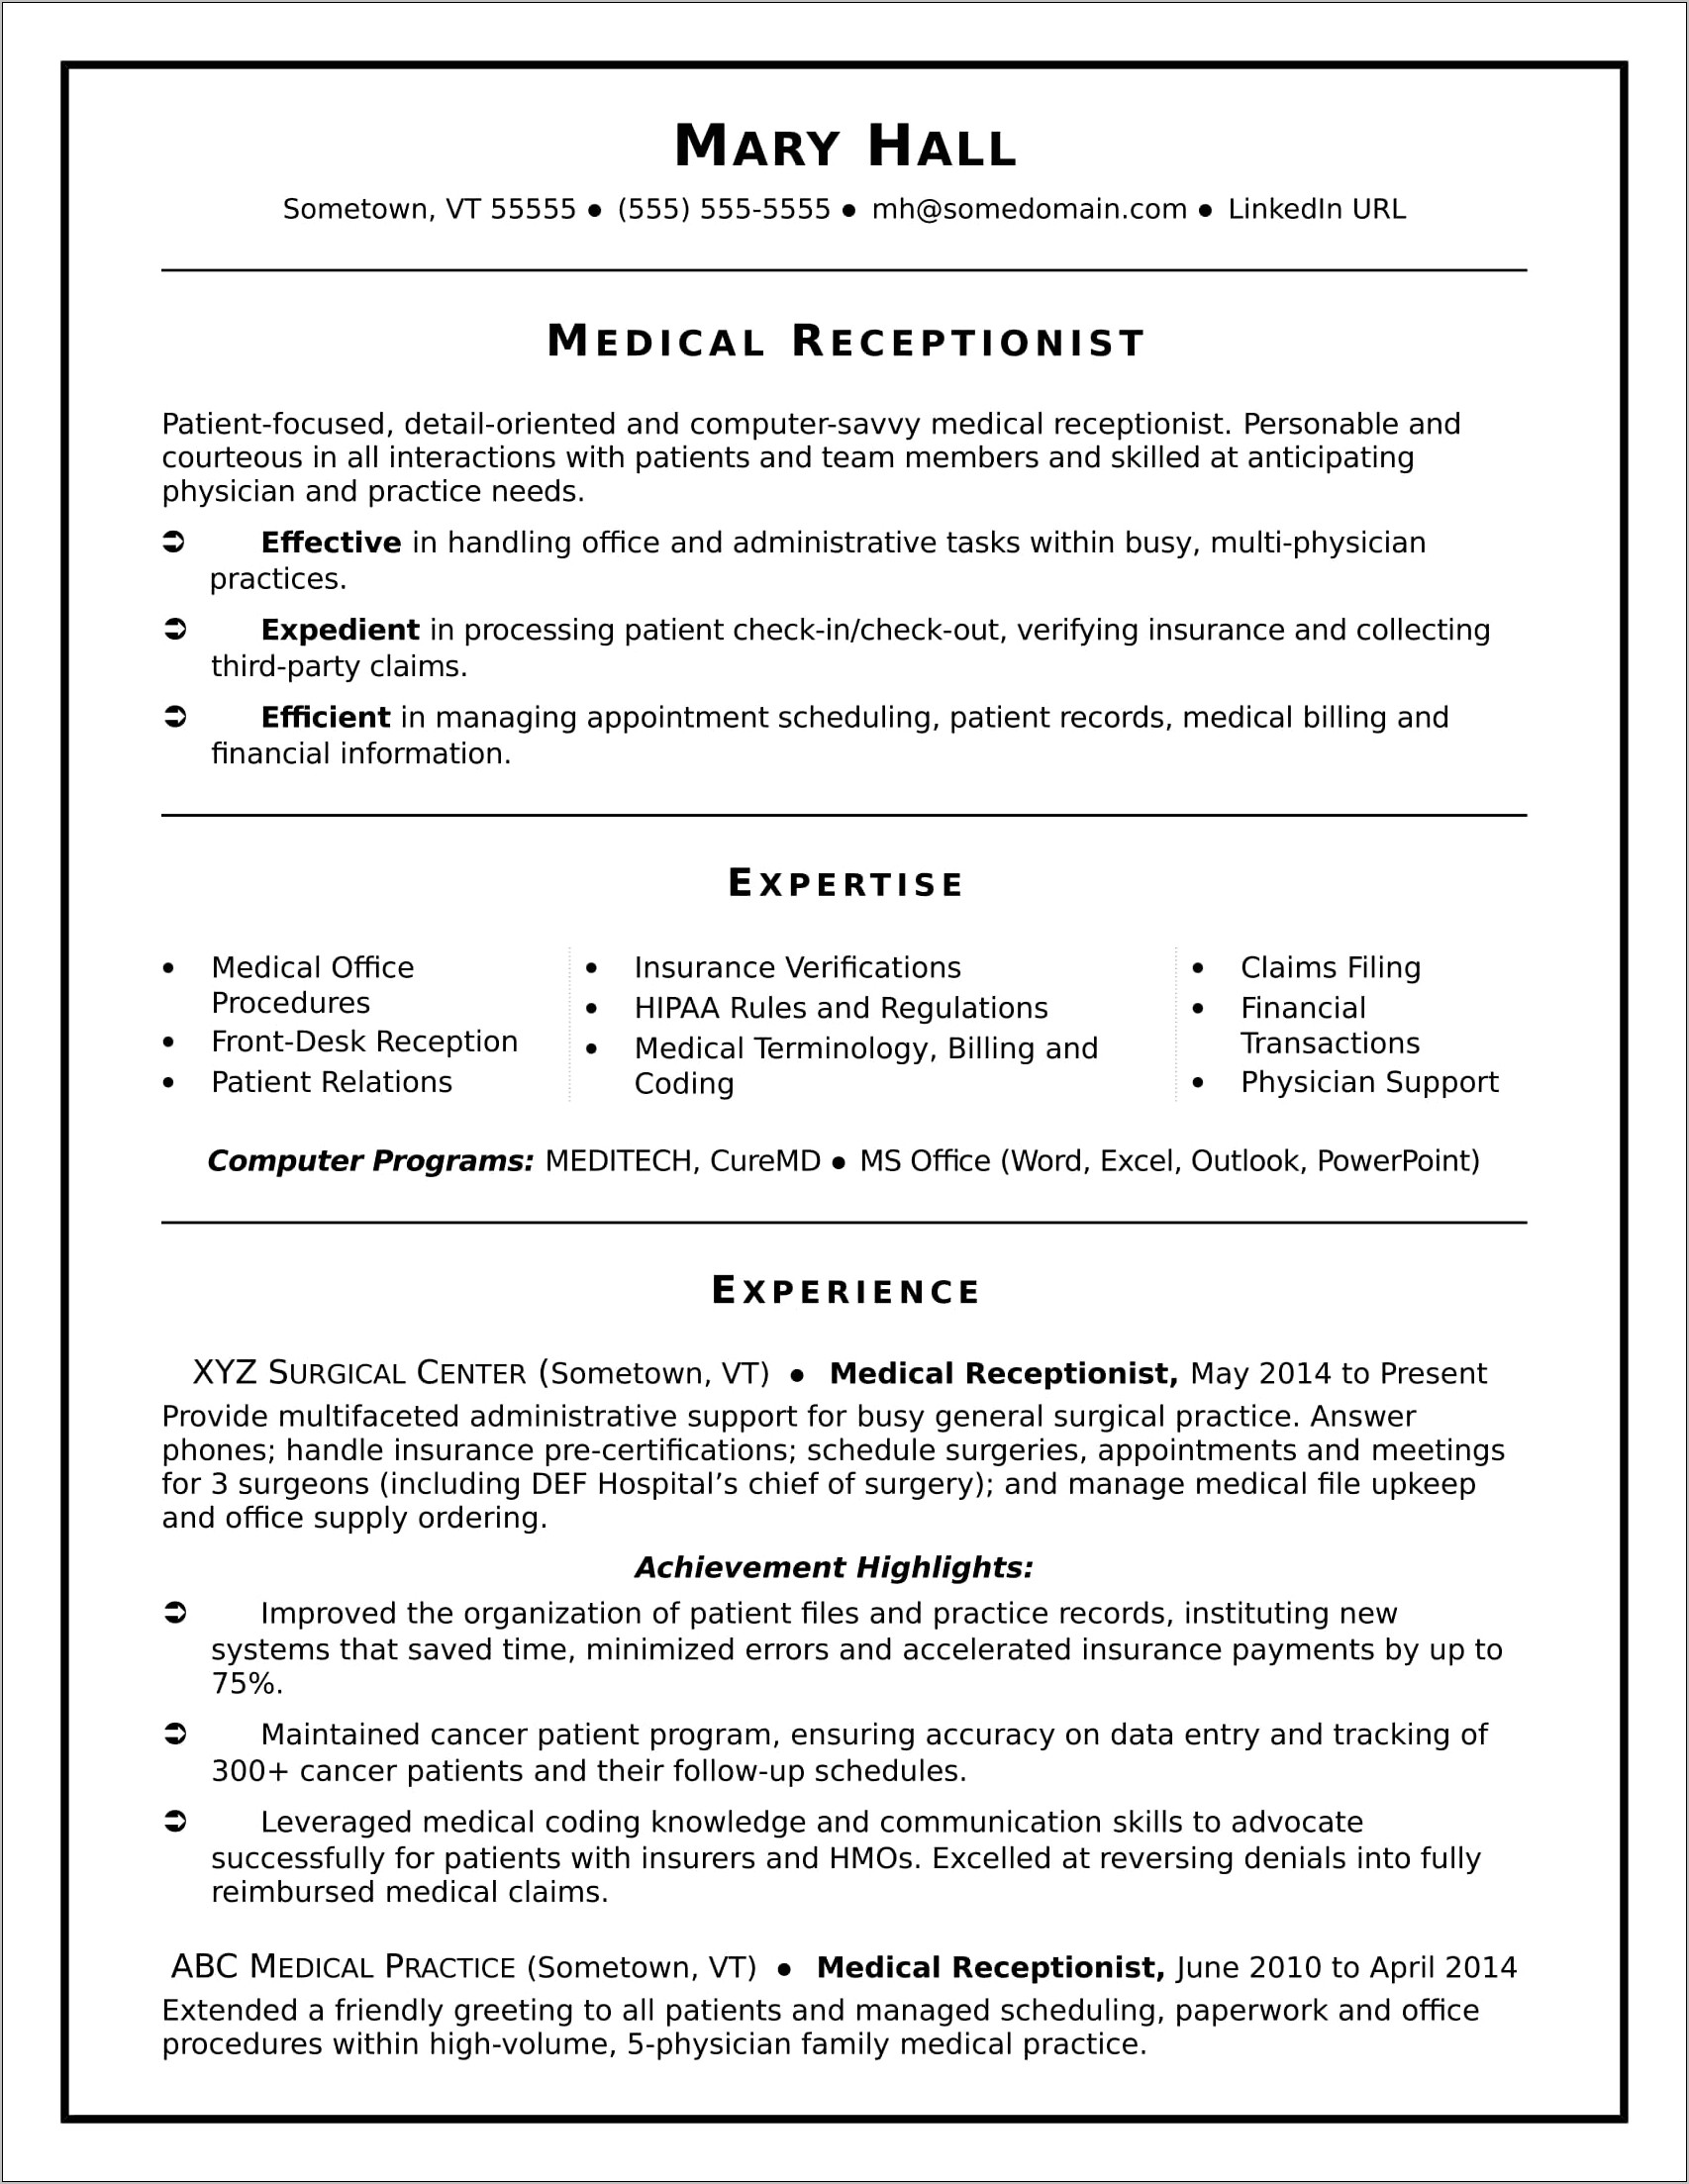 Sample Cover Letter For Resume Medical Receptionist